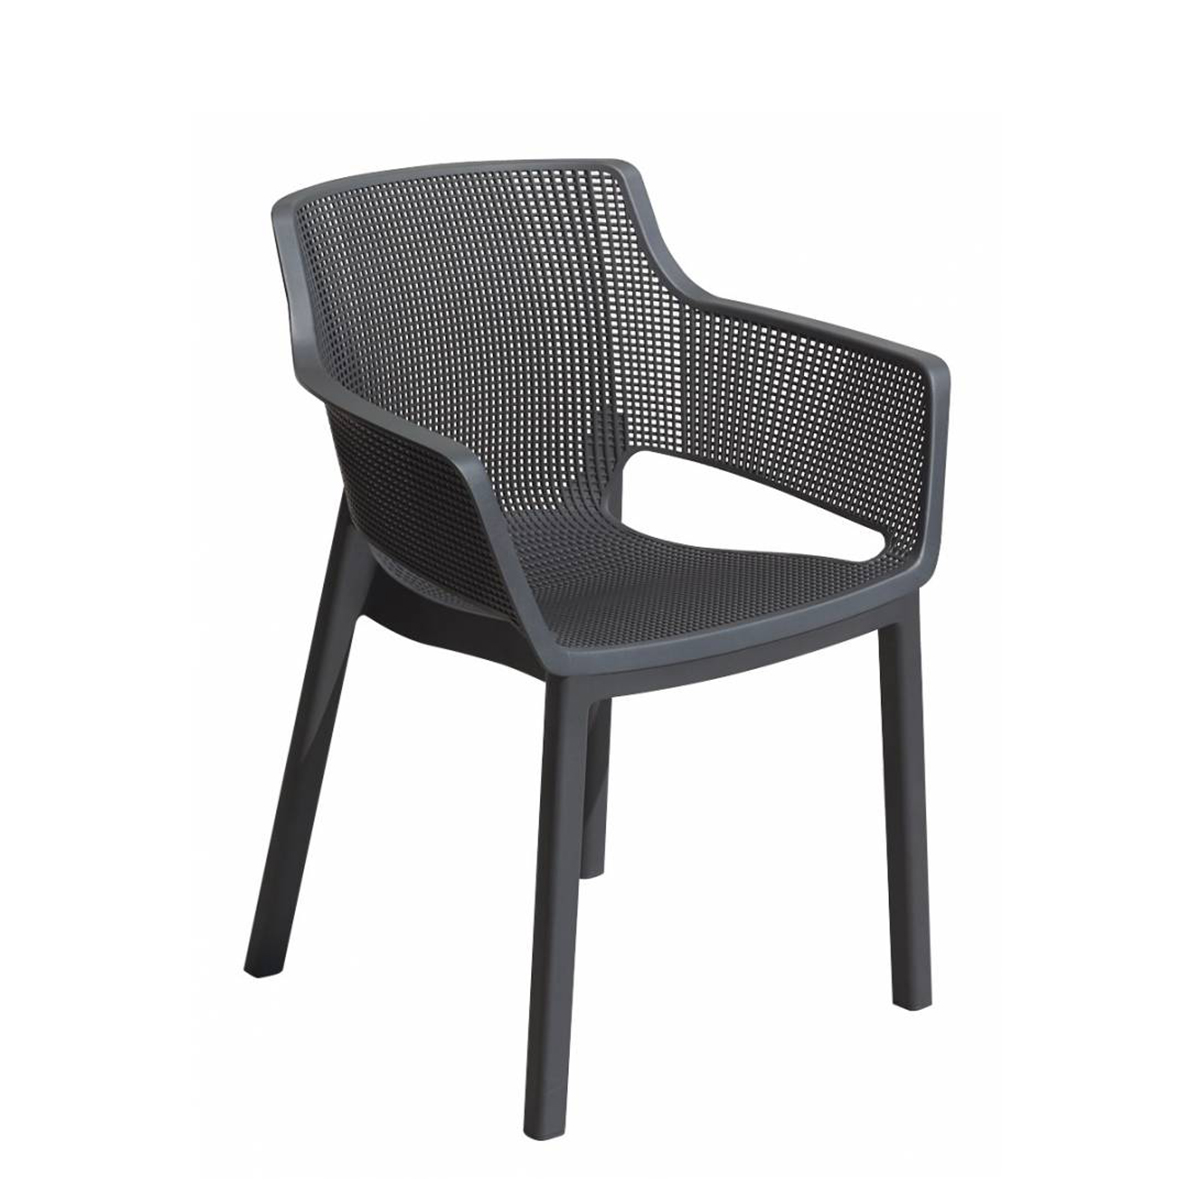 Стул Elisa chair графит стул садовый keter sicilia graphit 79х58х56 см полипропилен серый